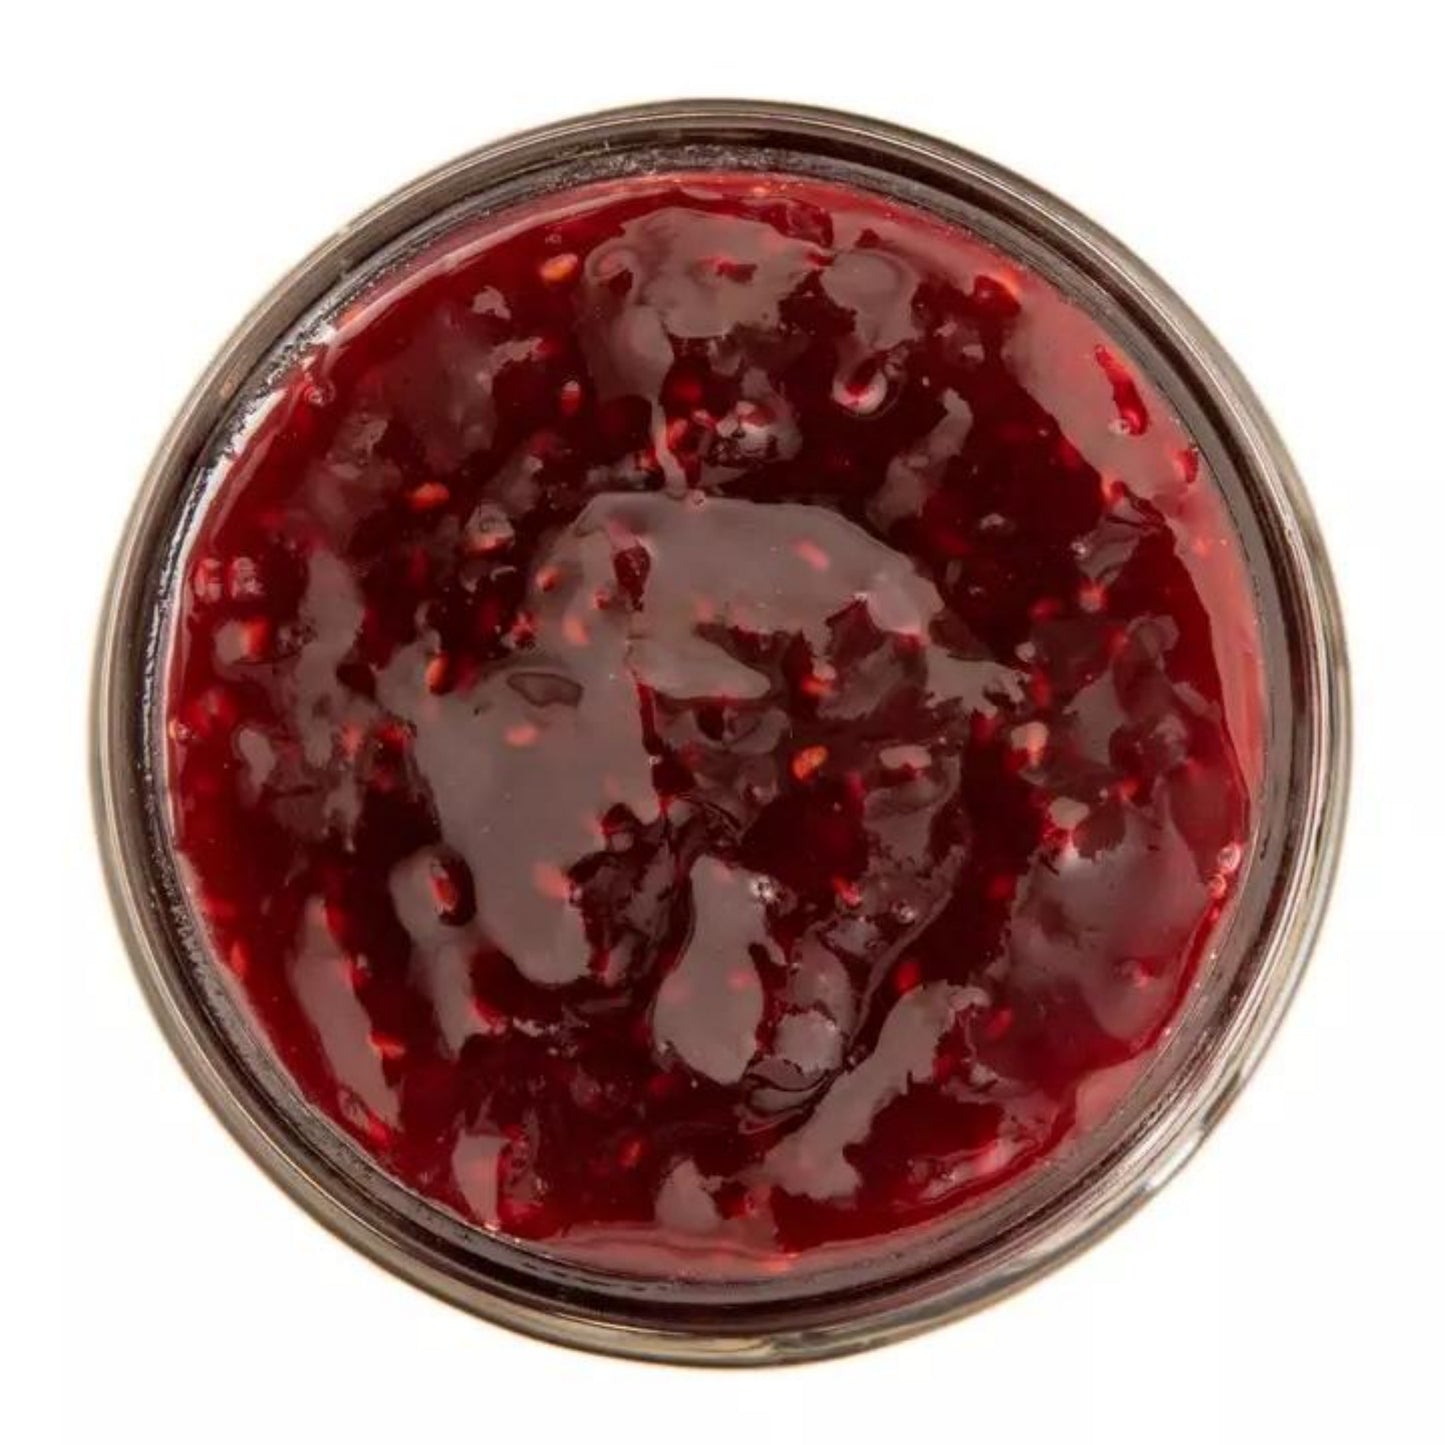 Naked Raspberry Spread (No Sugar Added) Open Jar